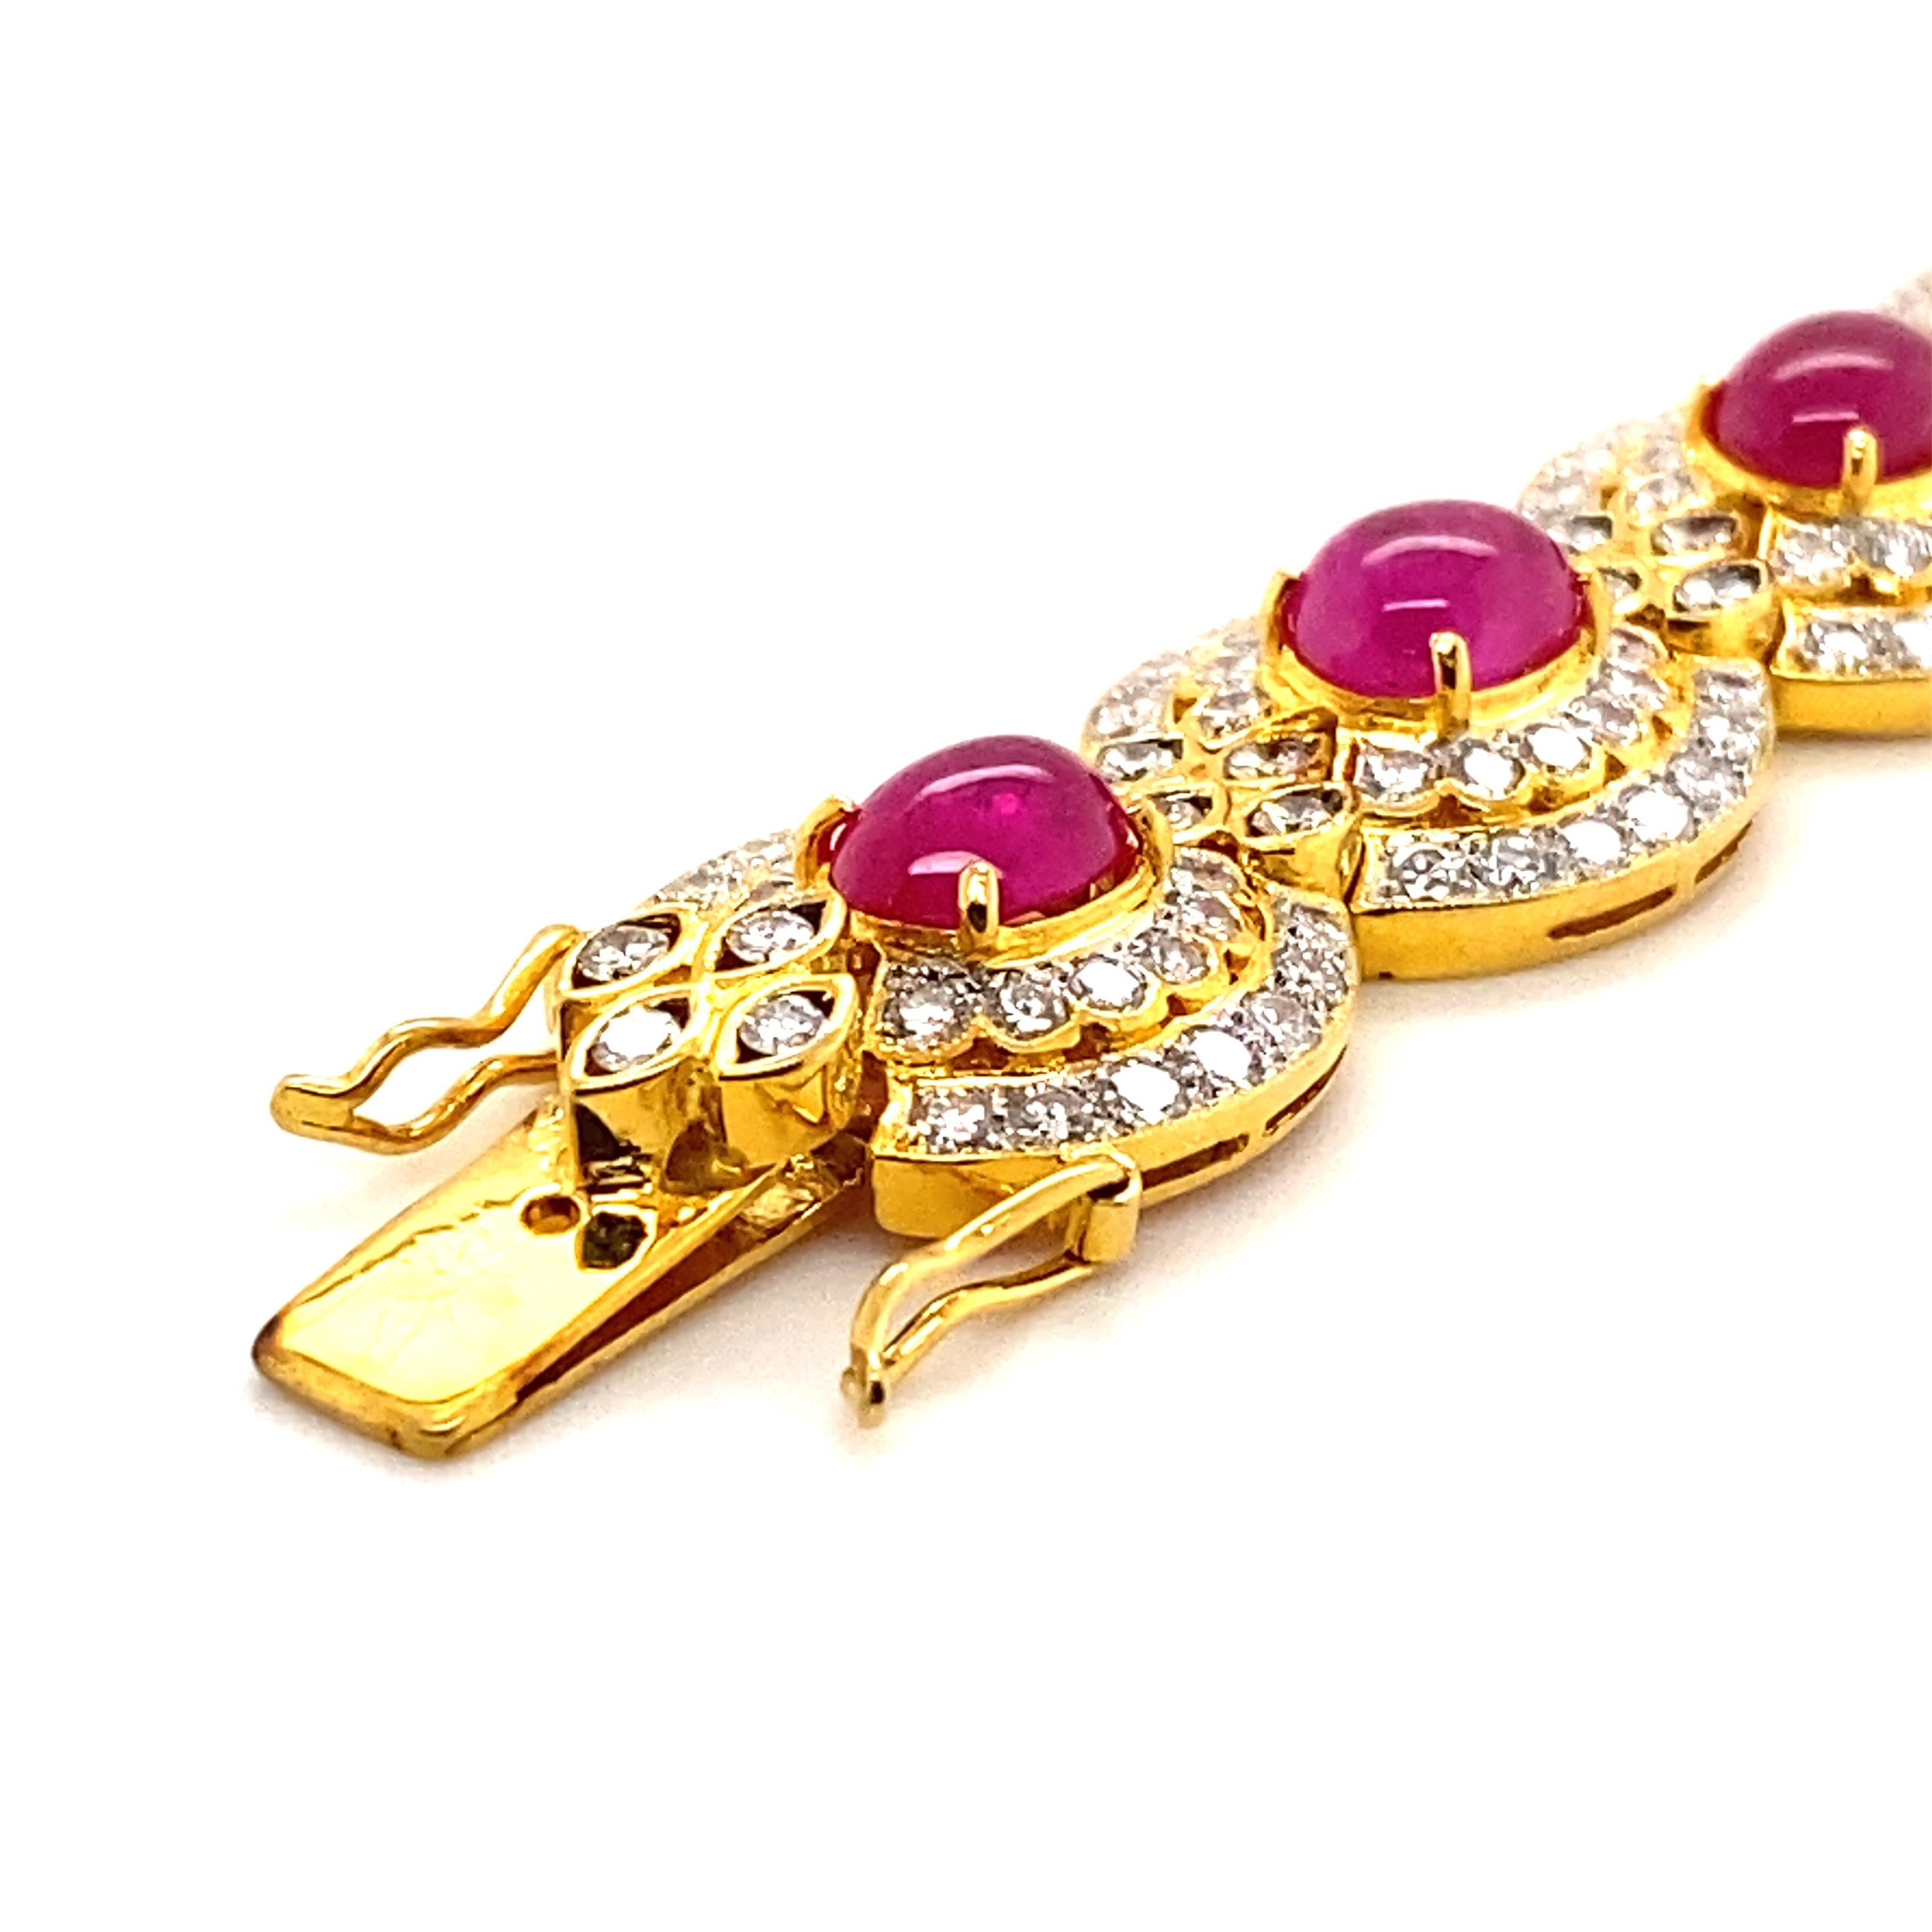 Splendid Ruby and Diamond Bracelet in 18 Karat Yellow Gold 1